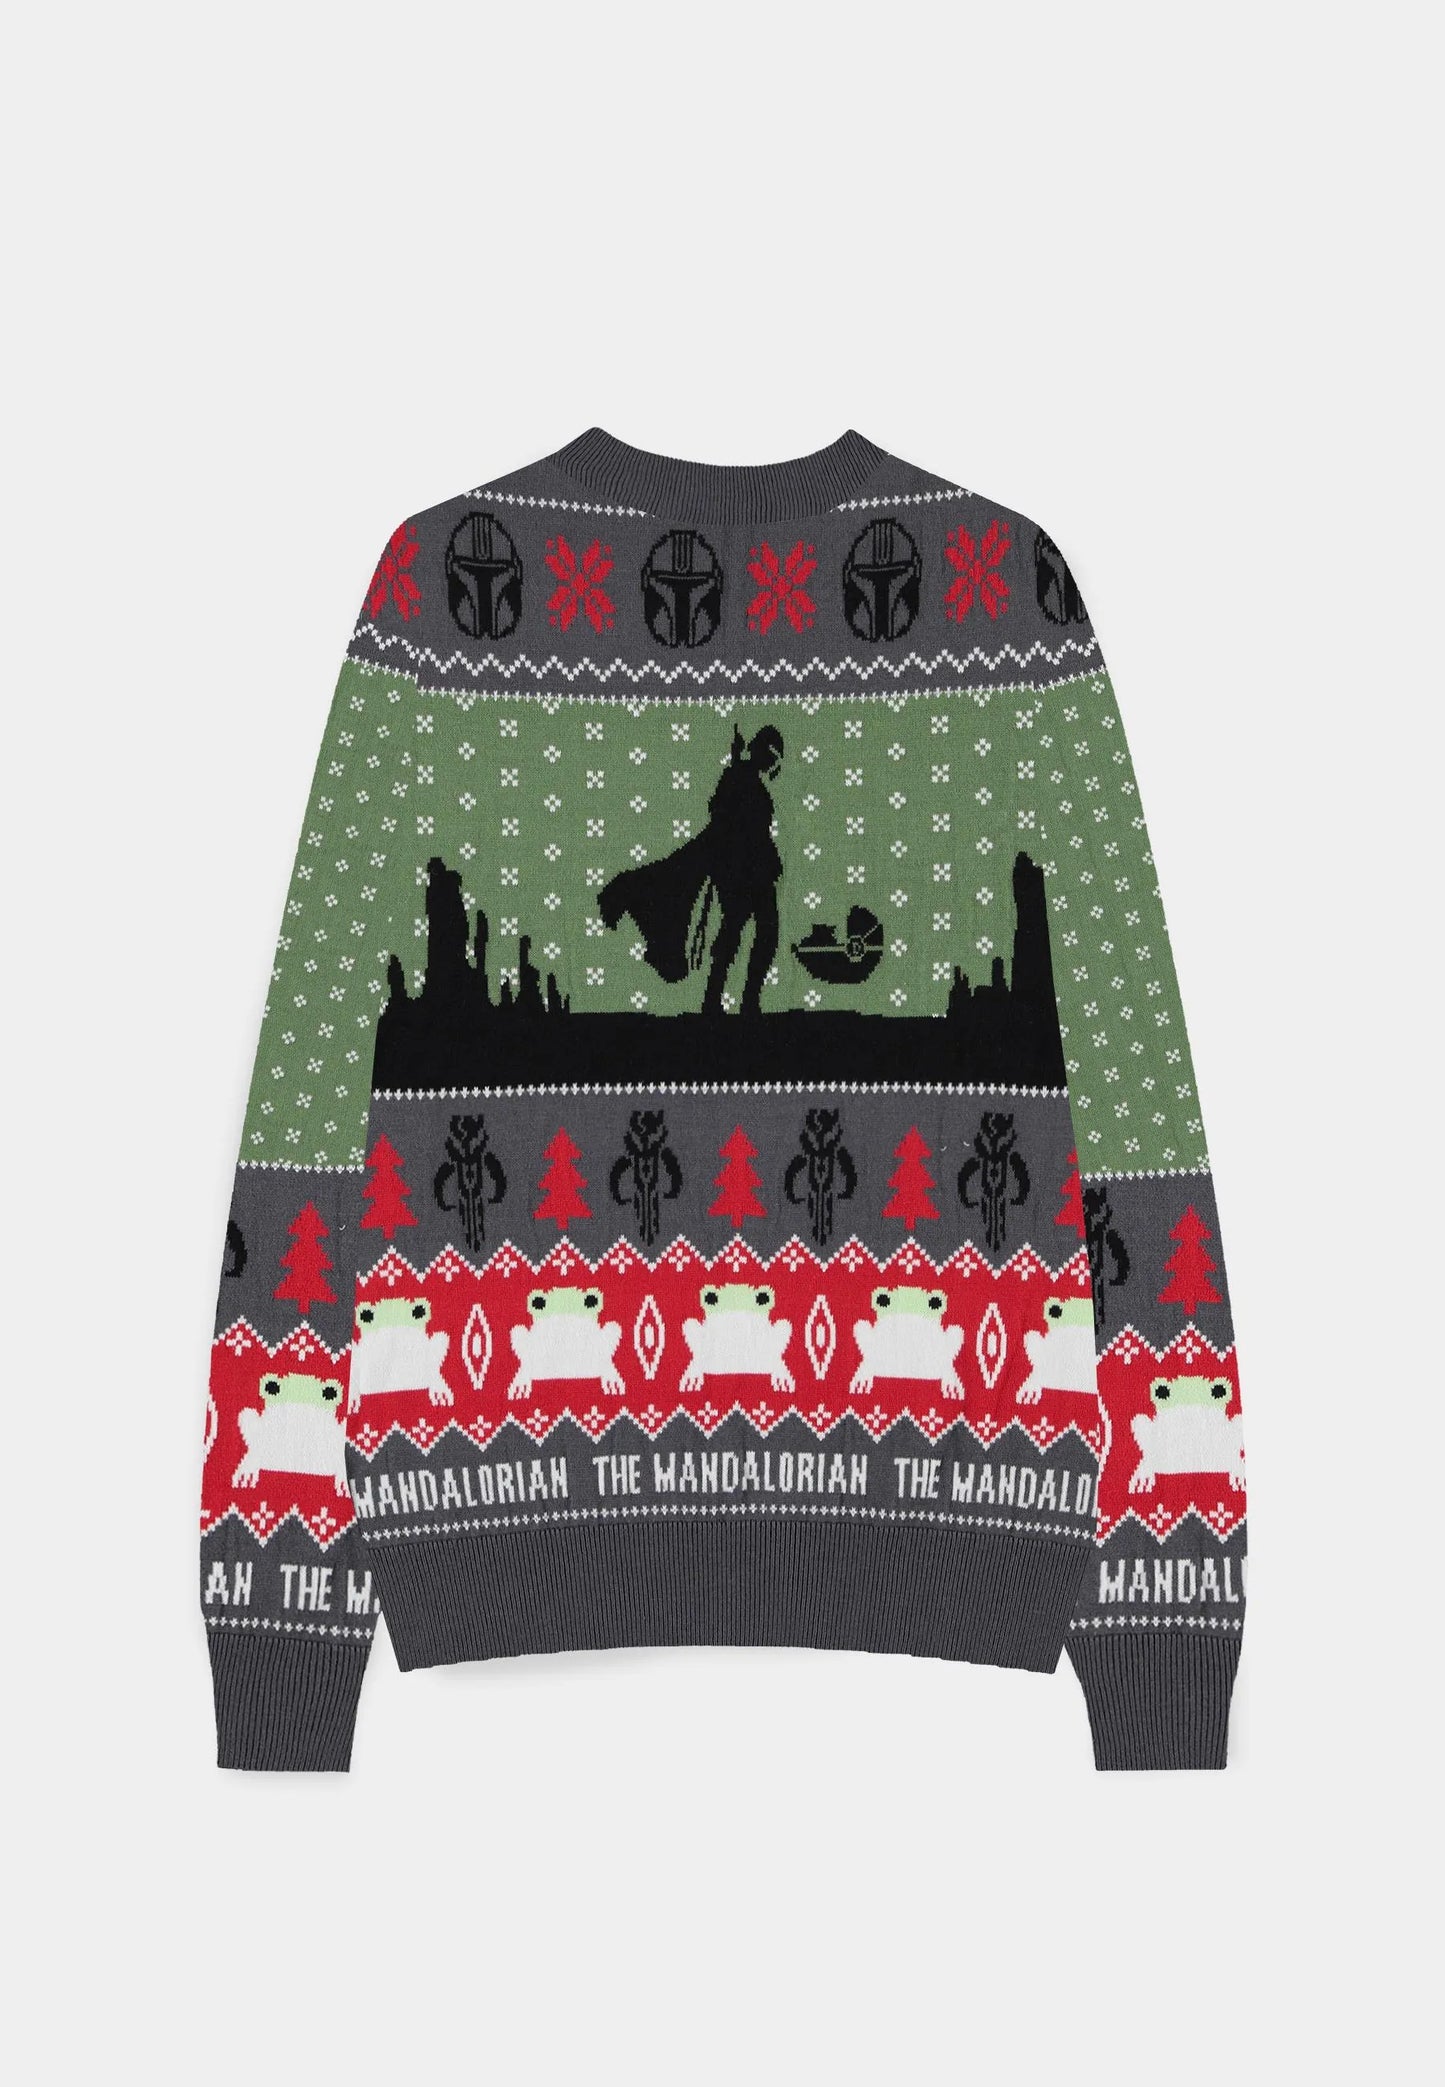 The Mandalorian Christmas Sweater - Grogu